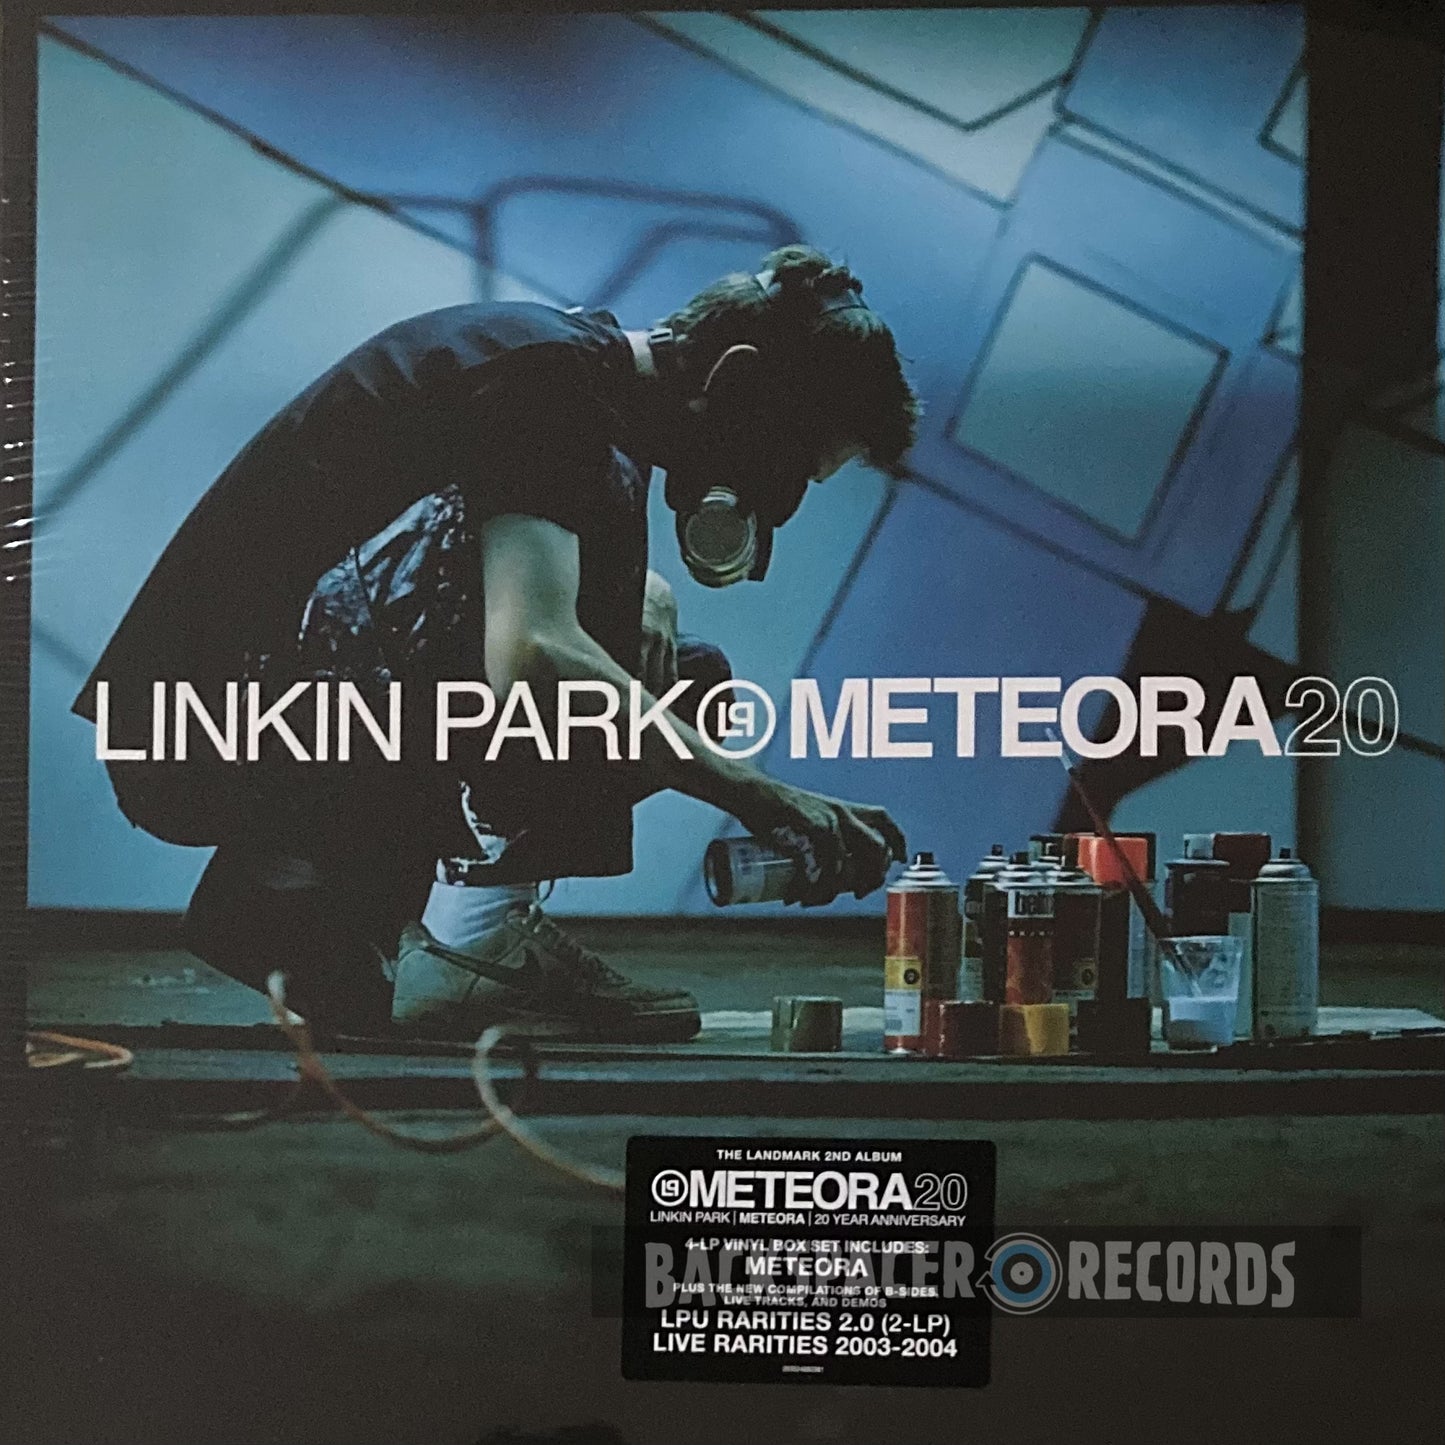 Linkin Park – Meteora 20 Deluxe Edition Boxset 4-LP (Sealed)